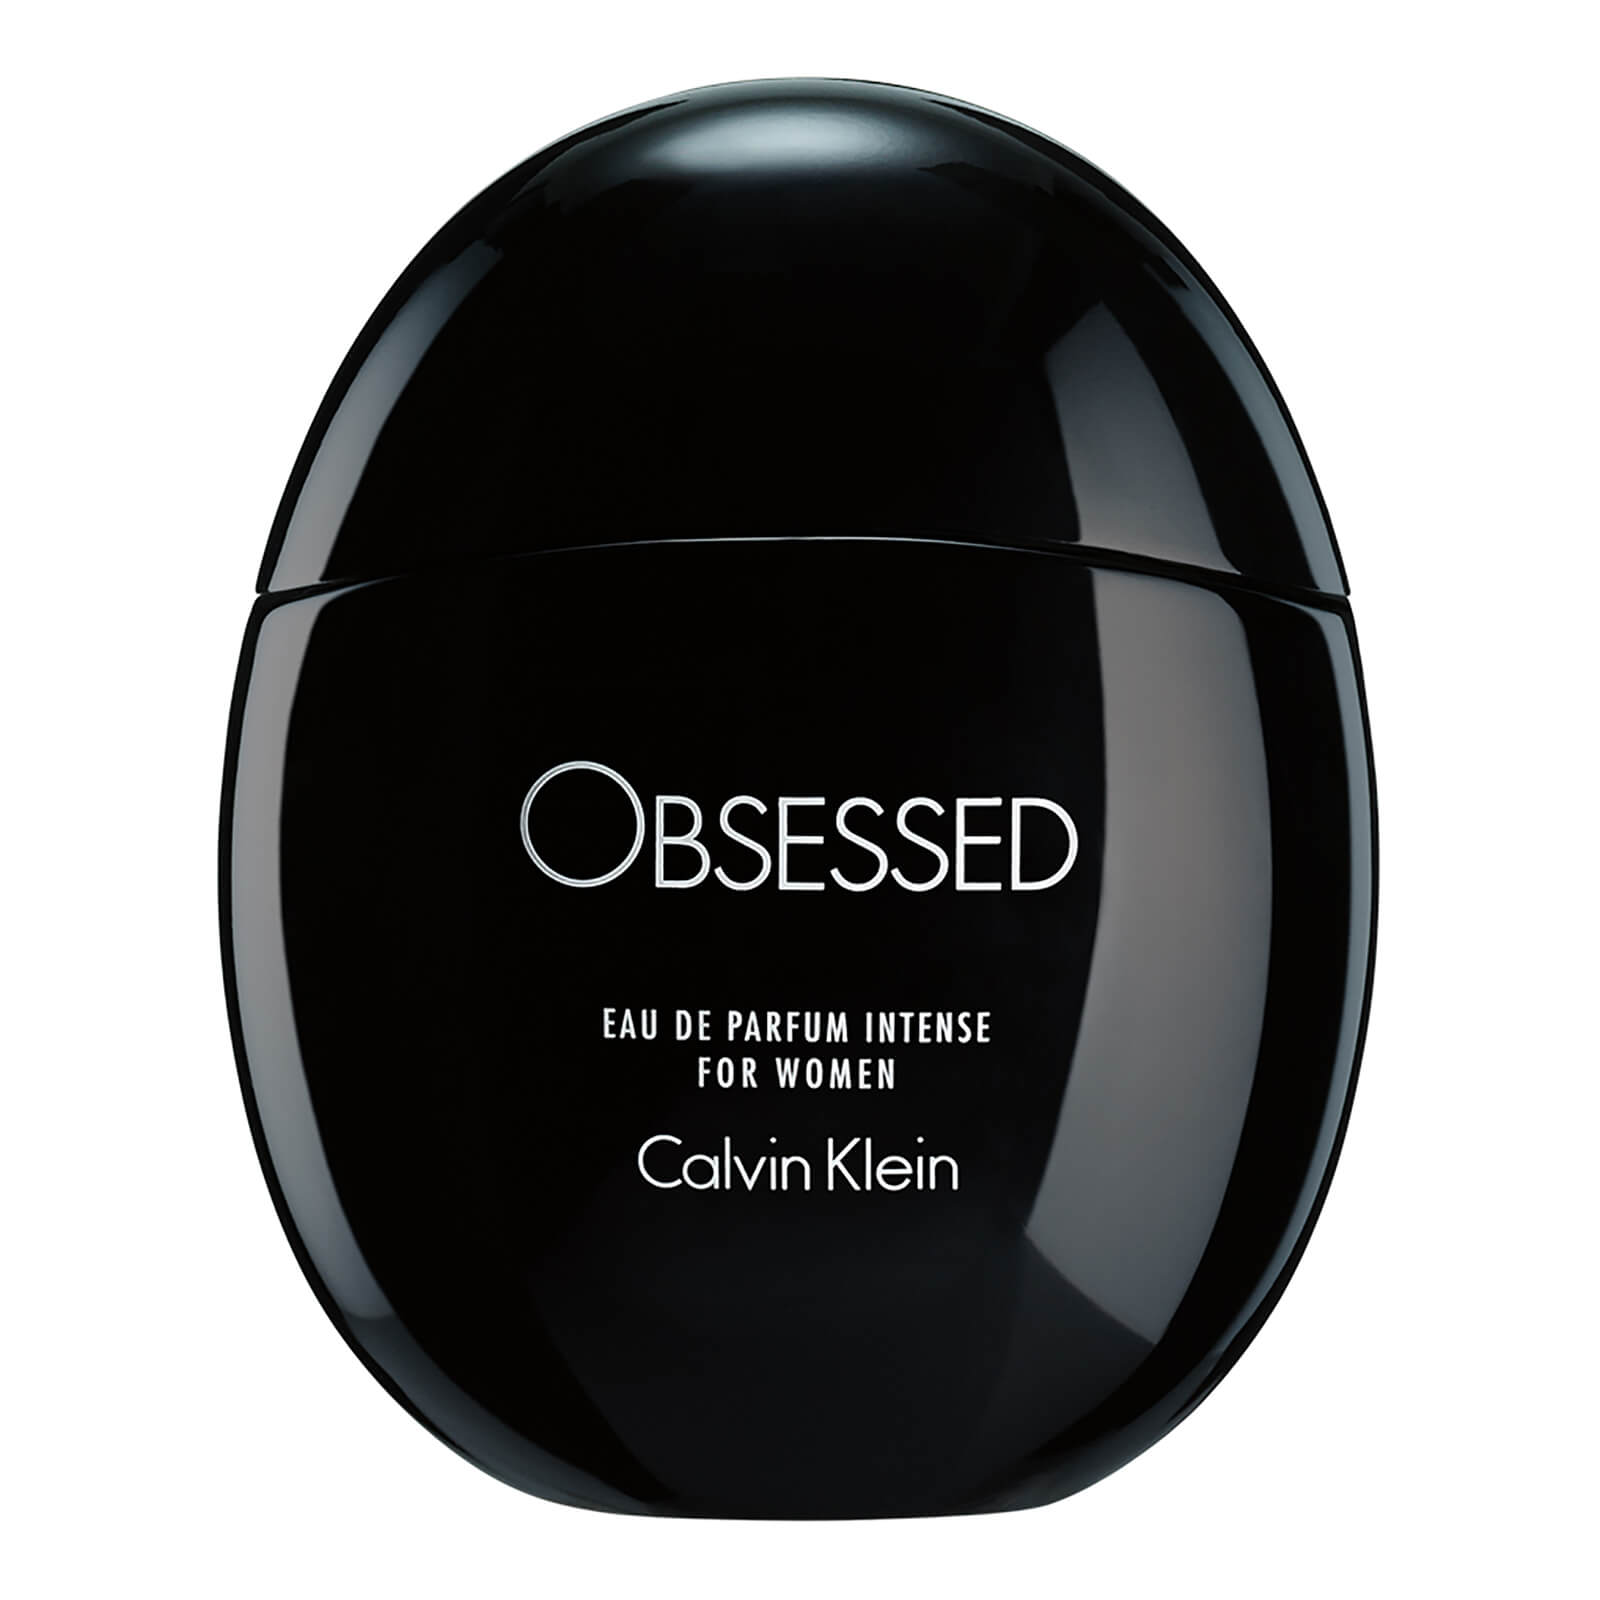 Eau de Parfum intenso para mujer Obsessed de Calvin Klein 100 ml